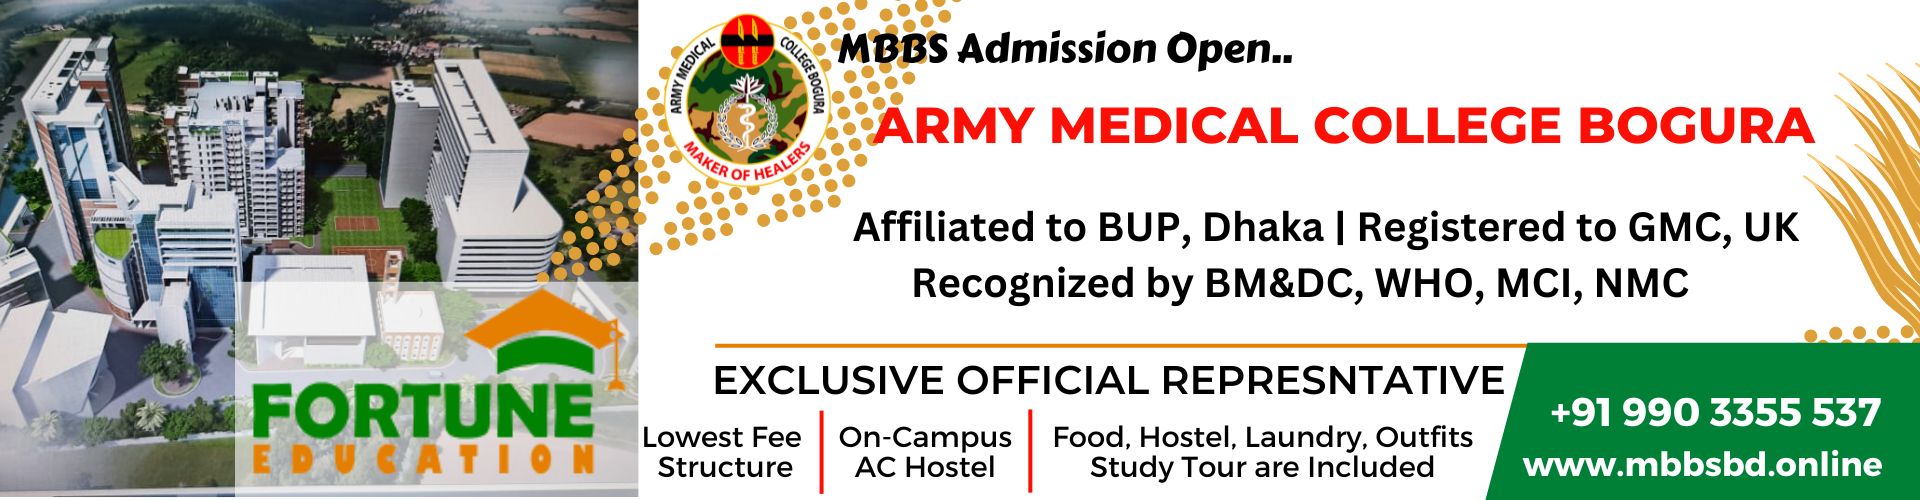 Army Medical College Bogura Banner